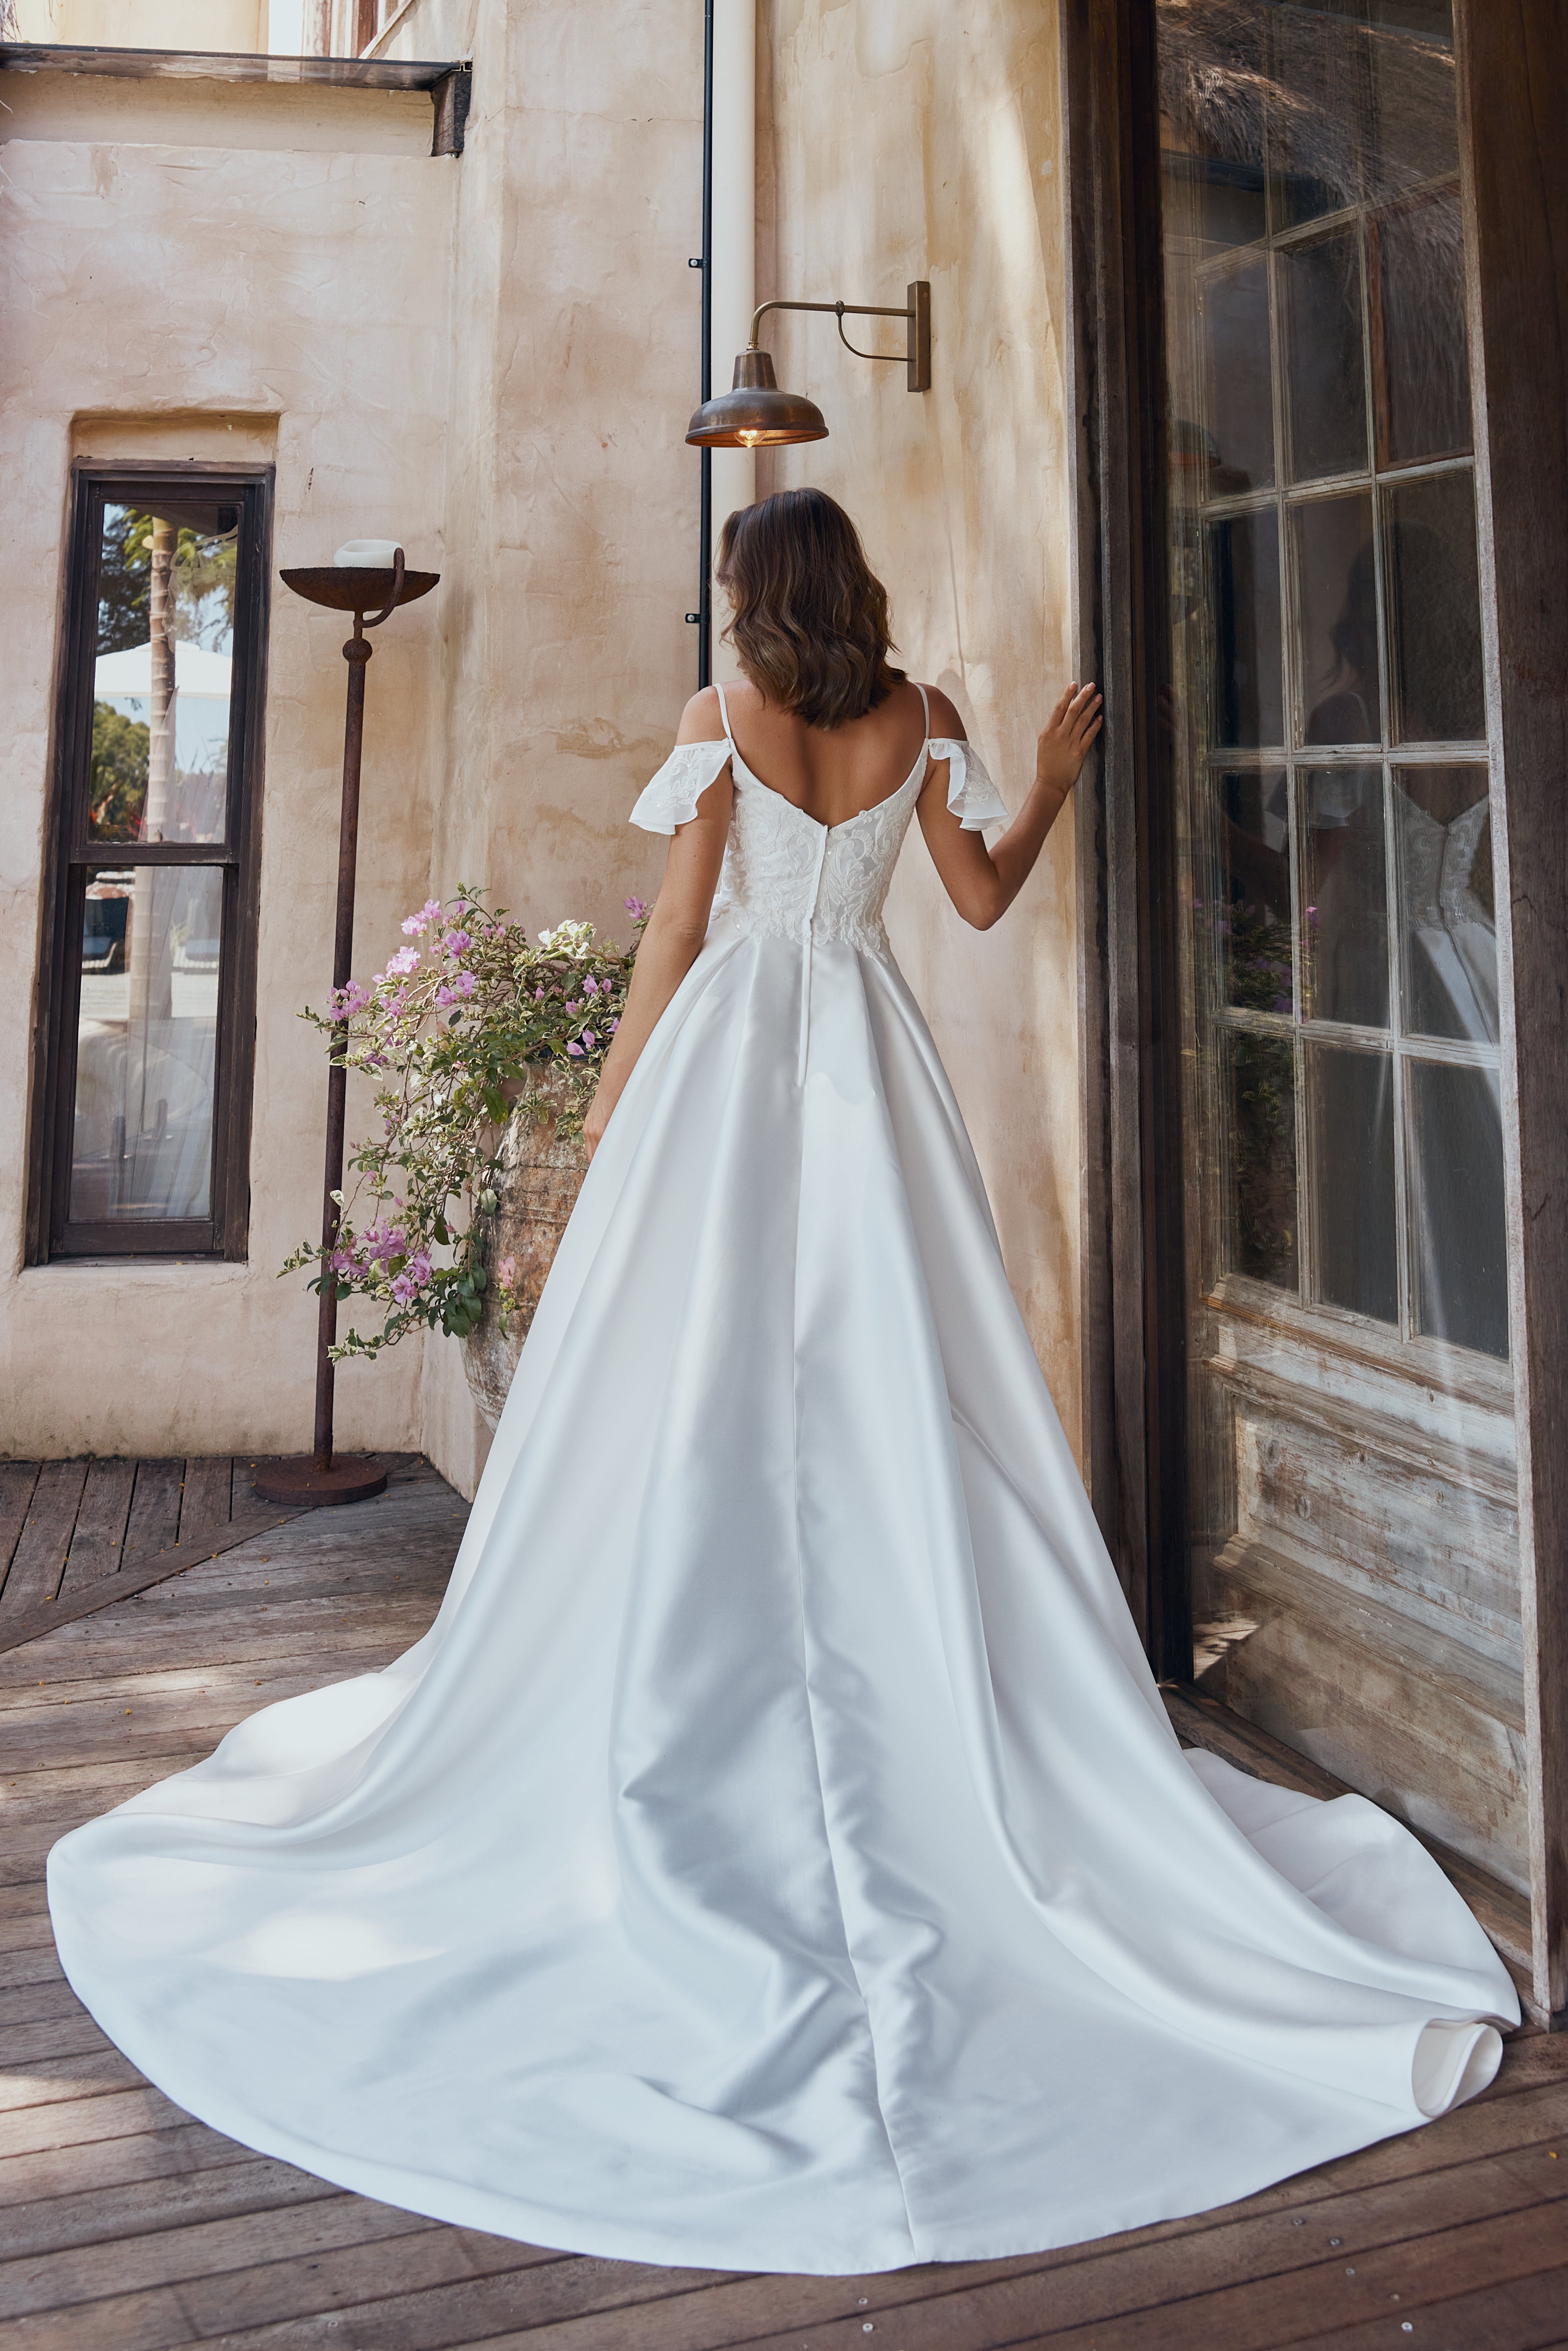 Samantha by Tania Olsen Vintage White Wedding Dress